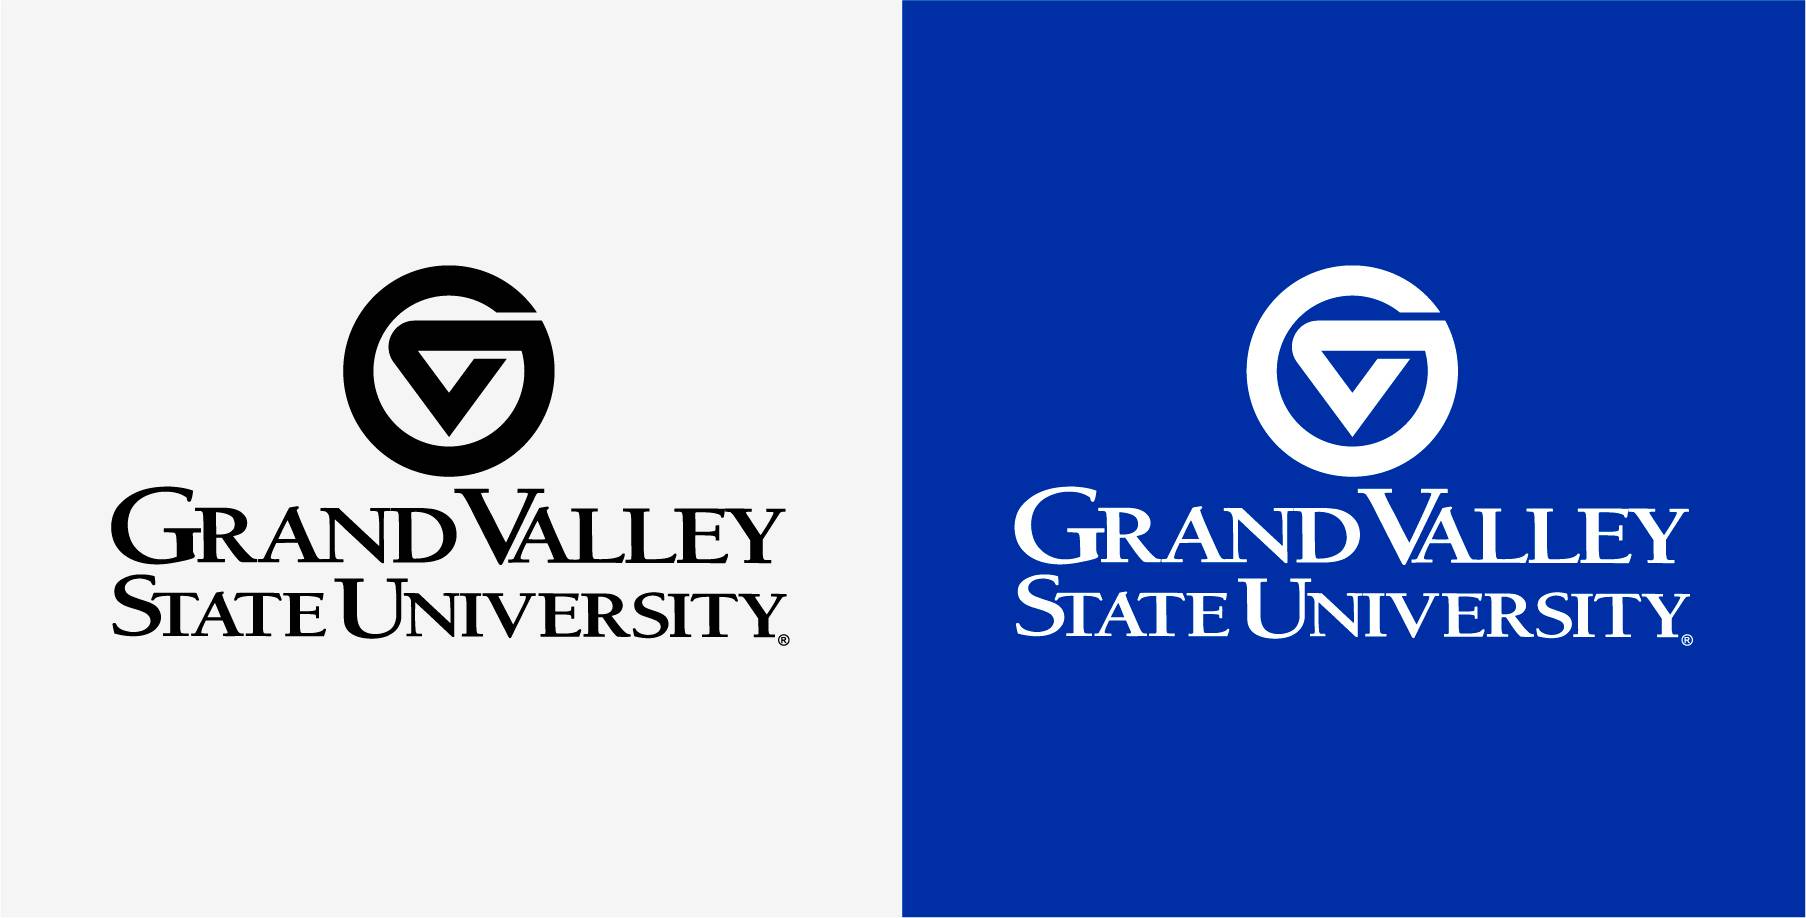 A black Grand Valley logo against a light grey background, and a white Grand Valley logo against a dark blue background.